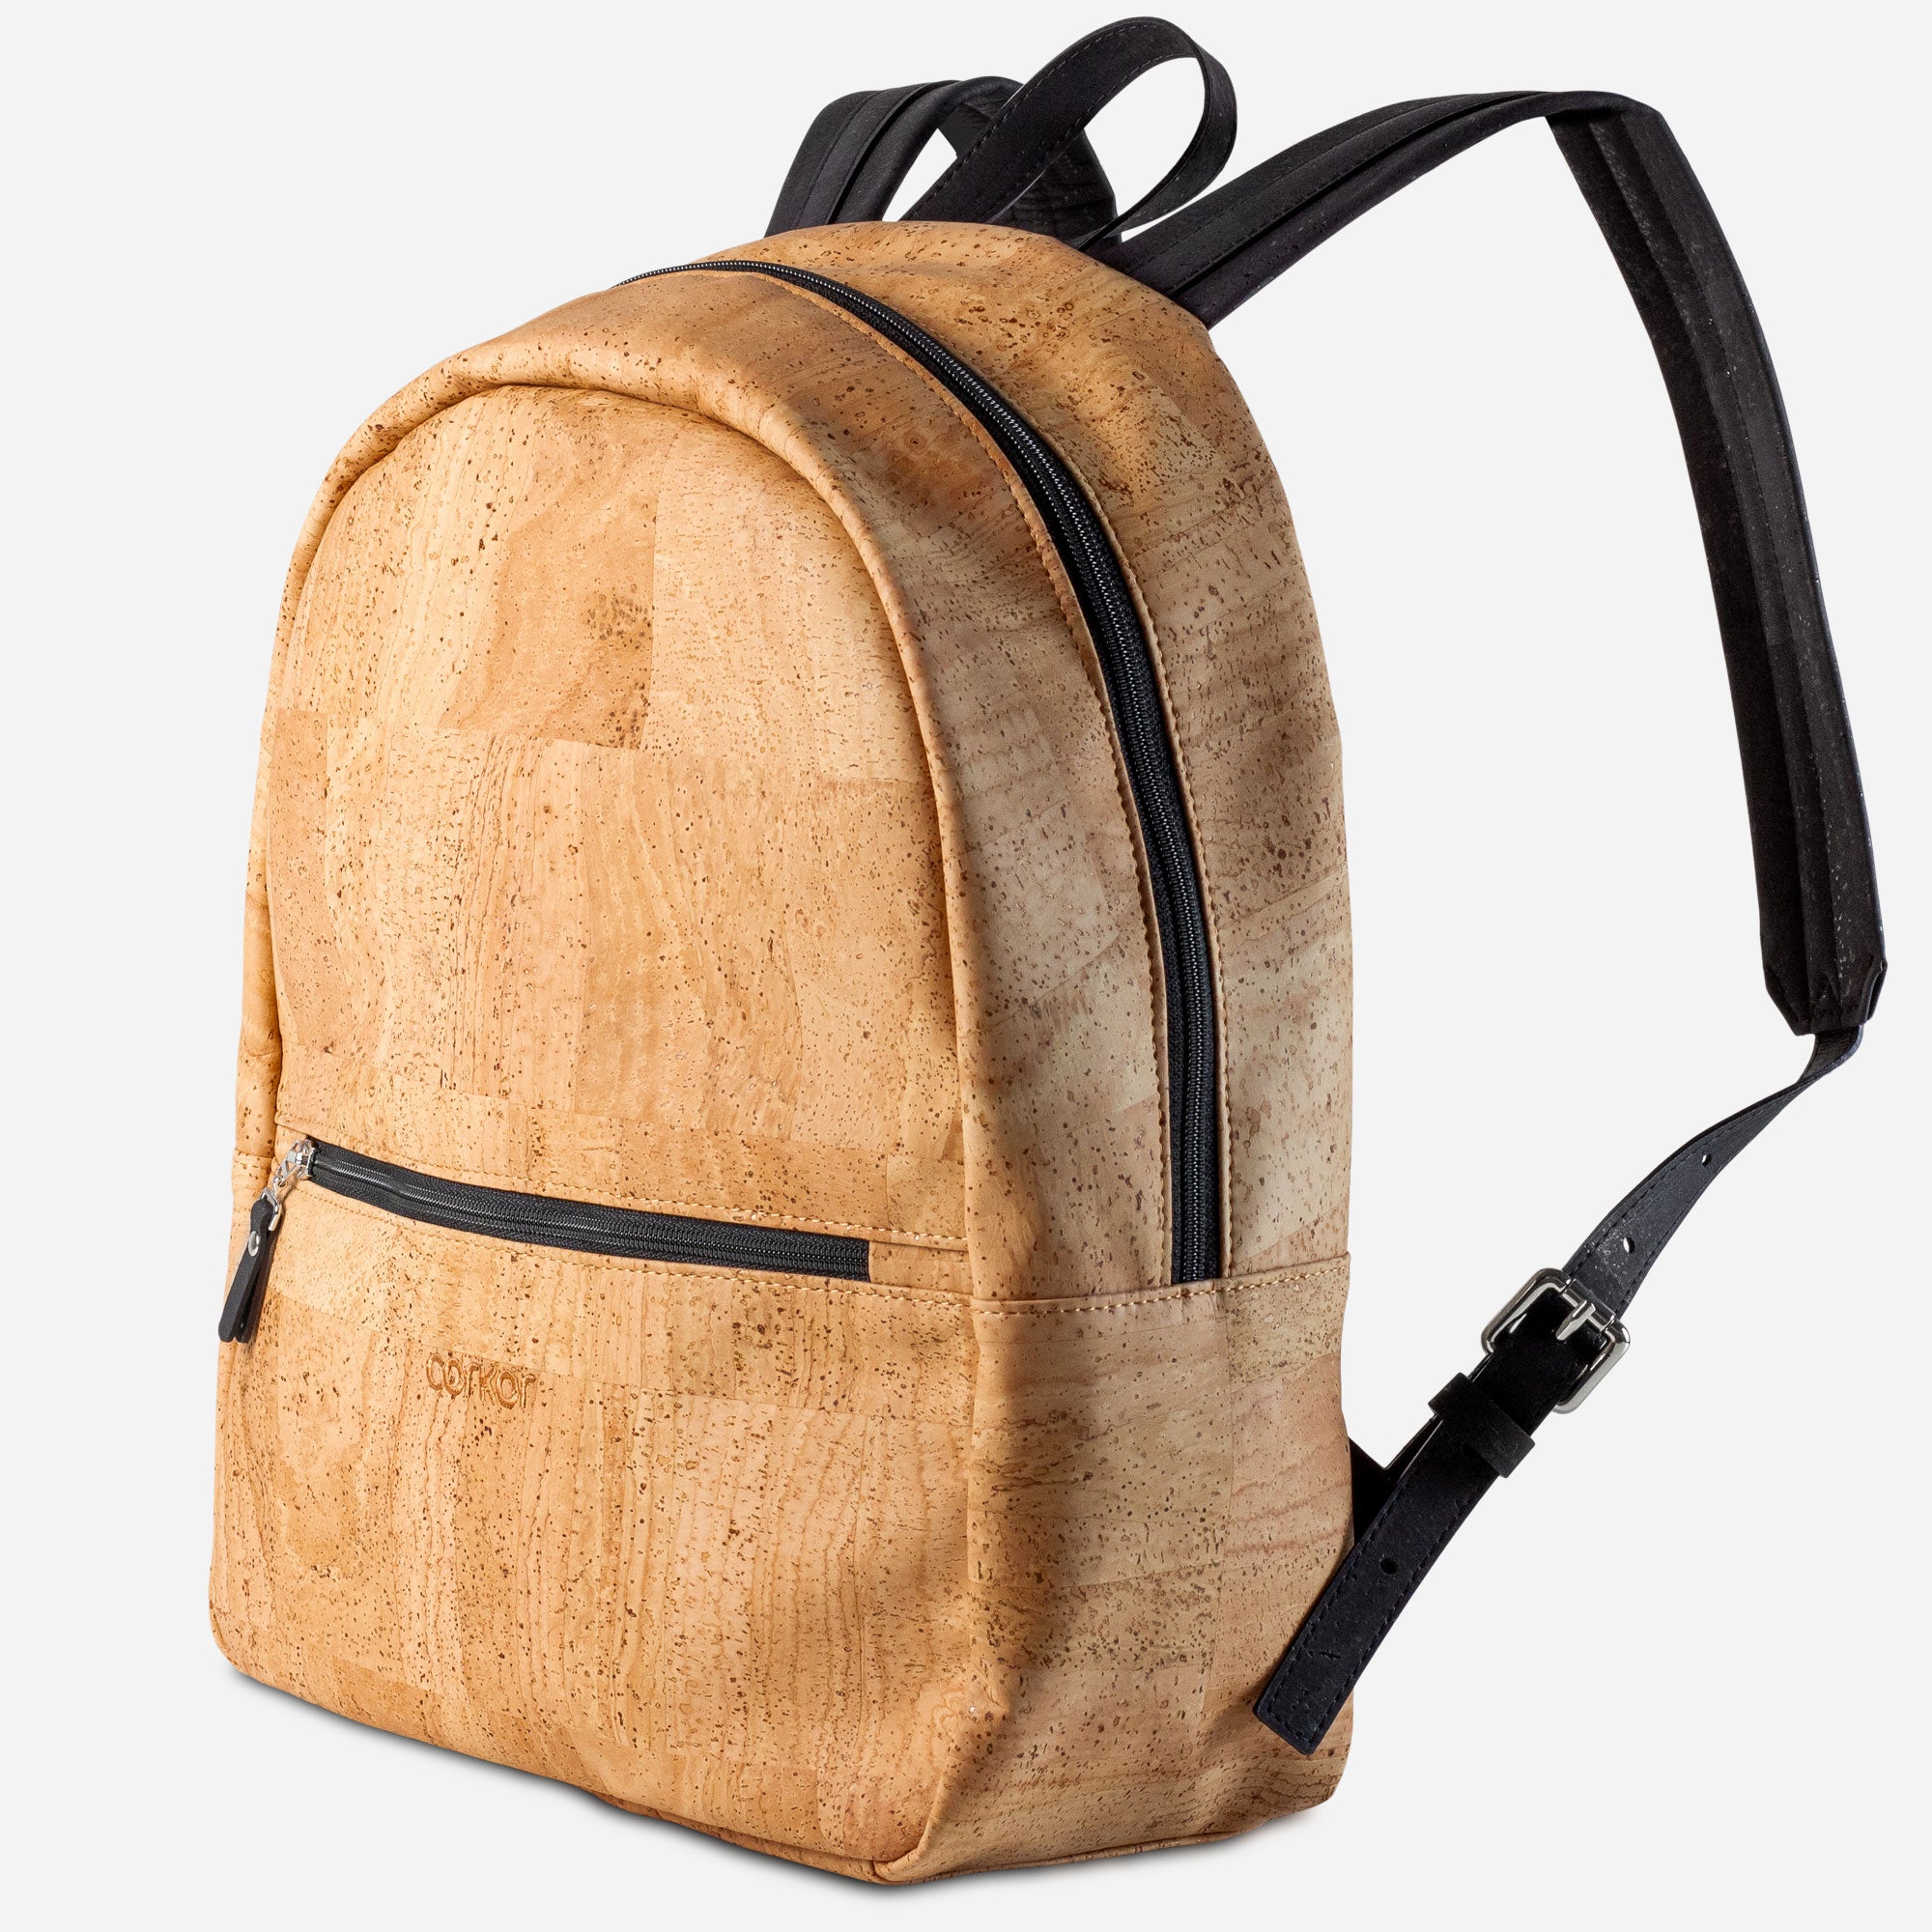 Cork Backpack Unisex